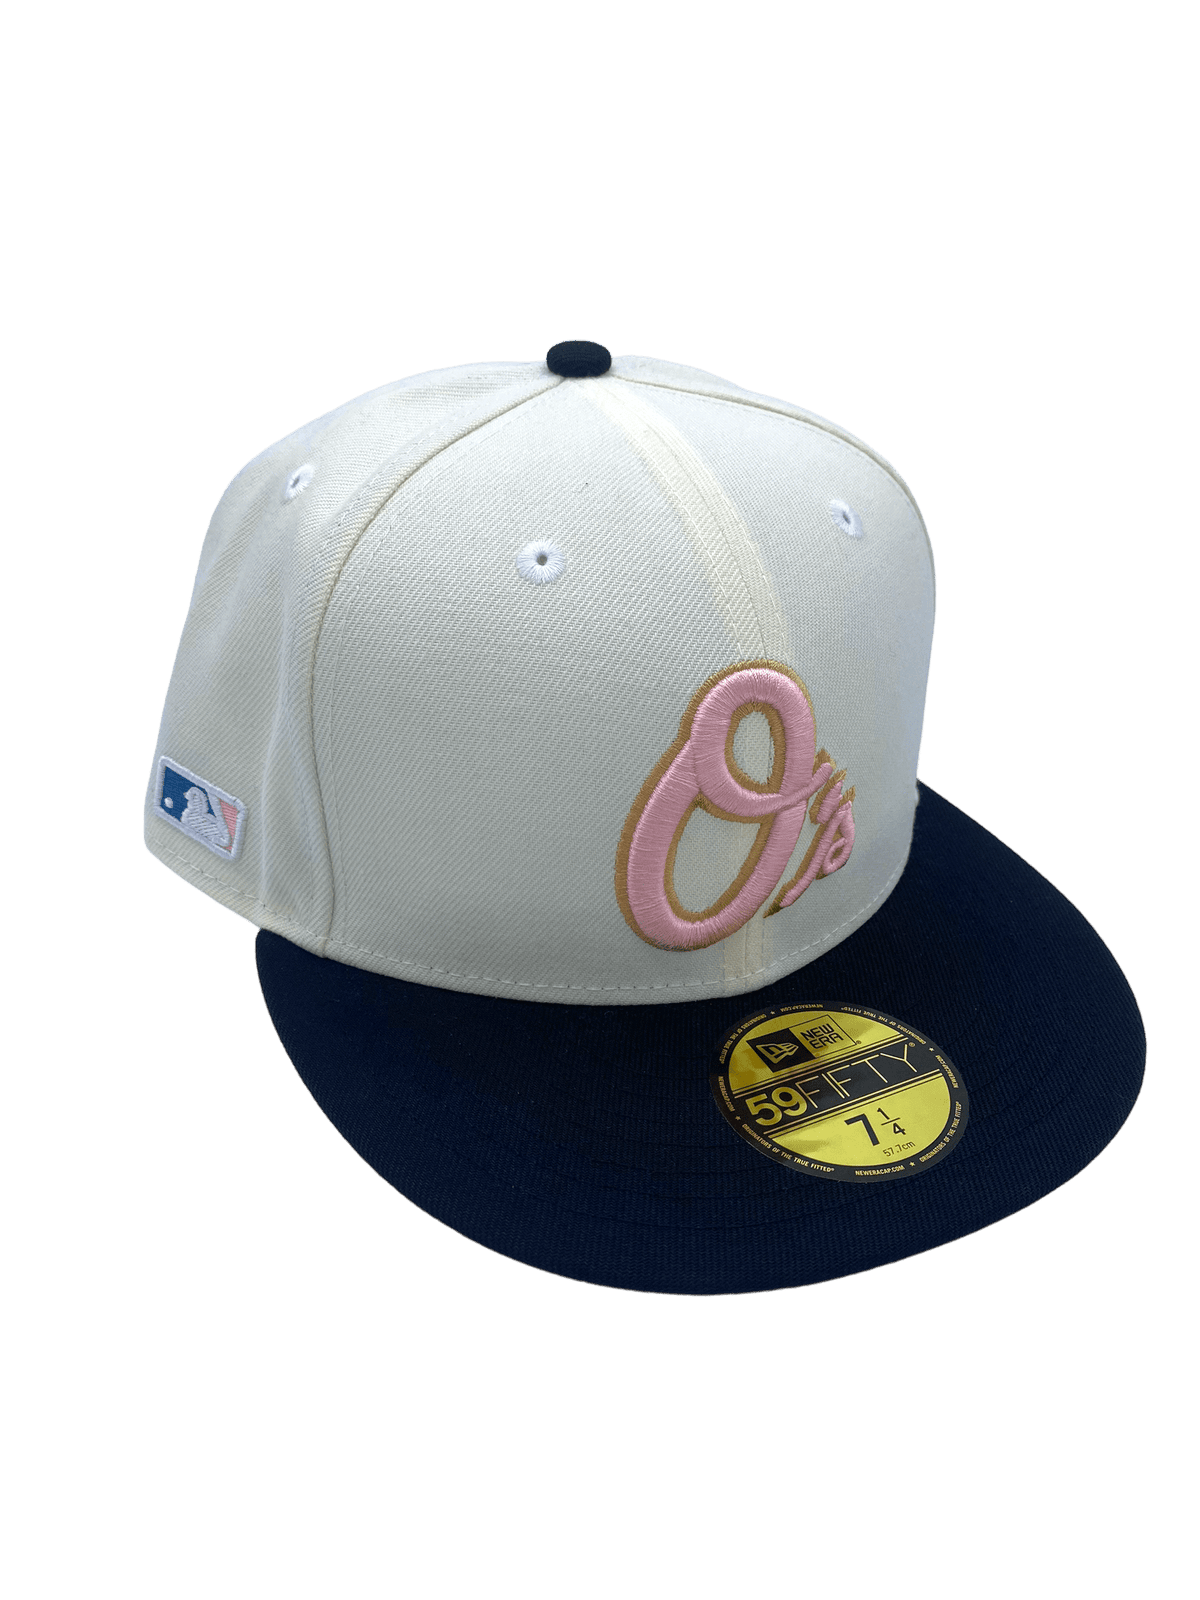 New Baltimore Orioles Mitchell & Ness Gray MLB Adjustable Snapback Cap Hat